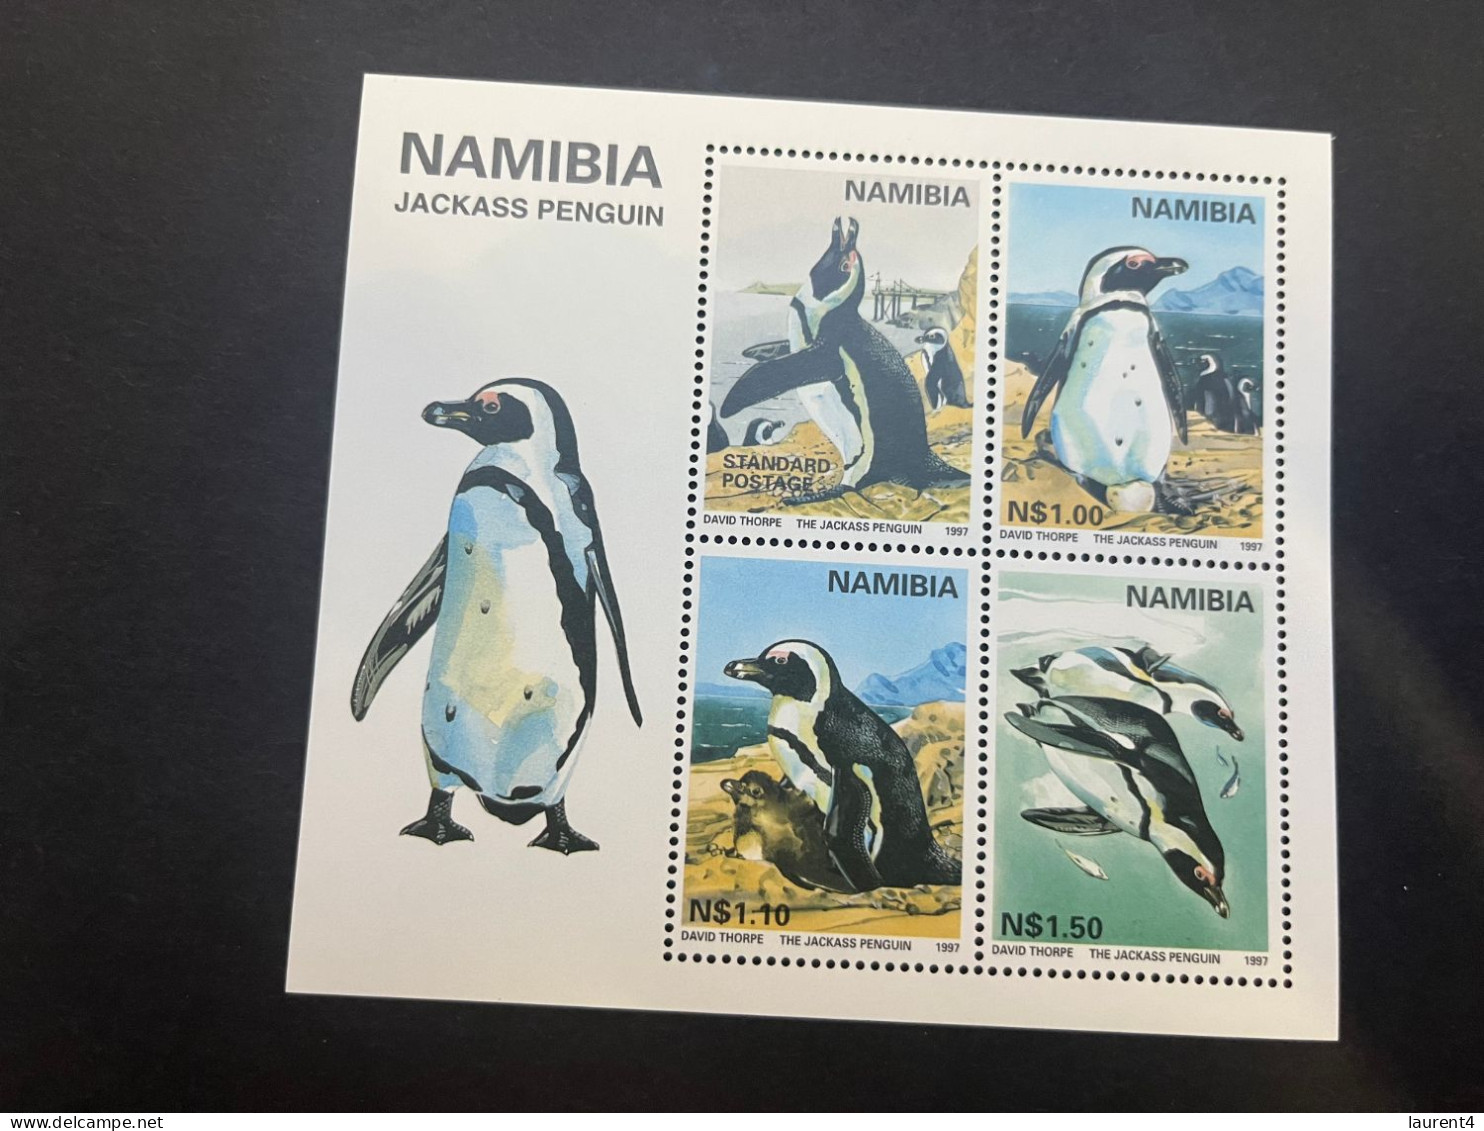 13-5-2024 (stamp) Mint (neuve) Mini-sheet - Namibia - Penguins - Pinguine